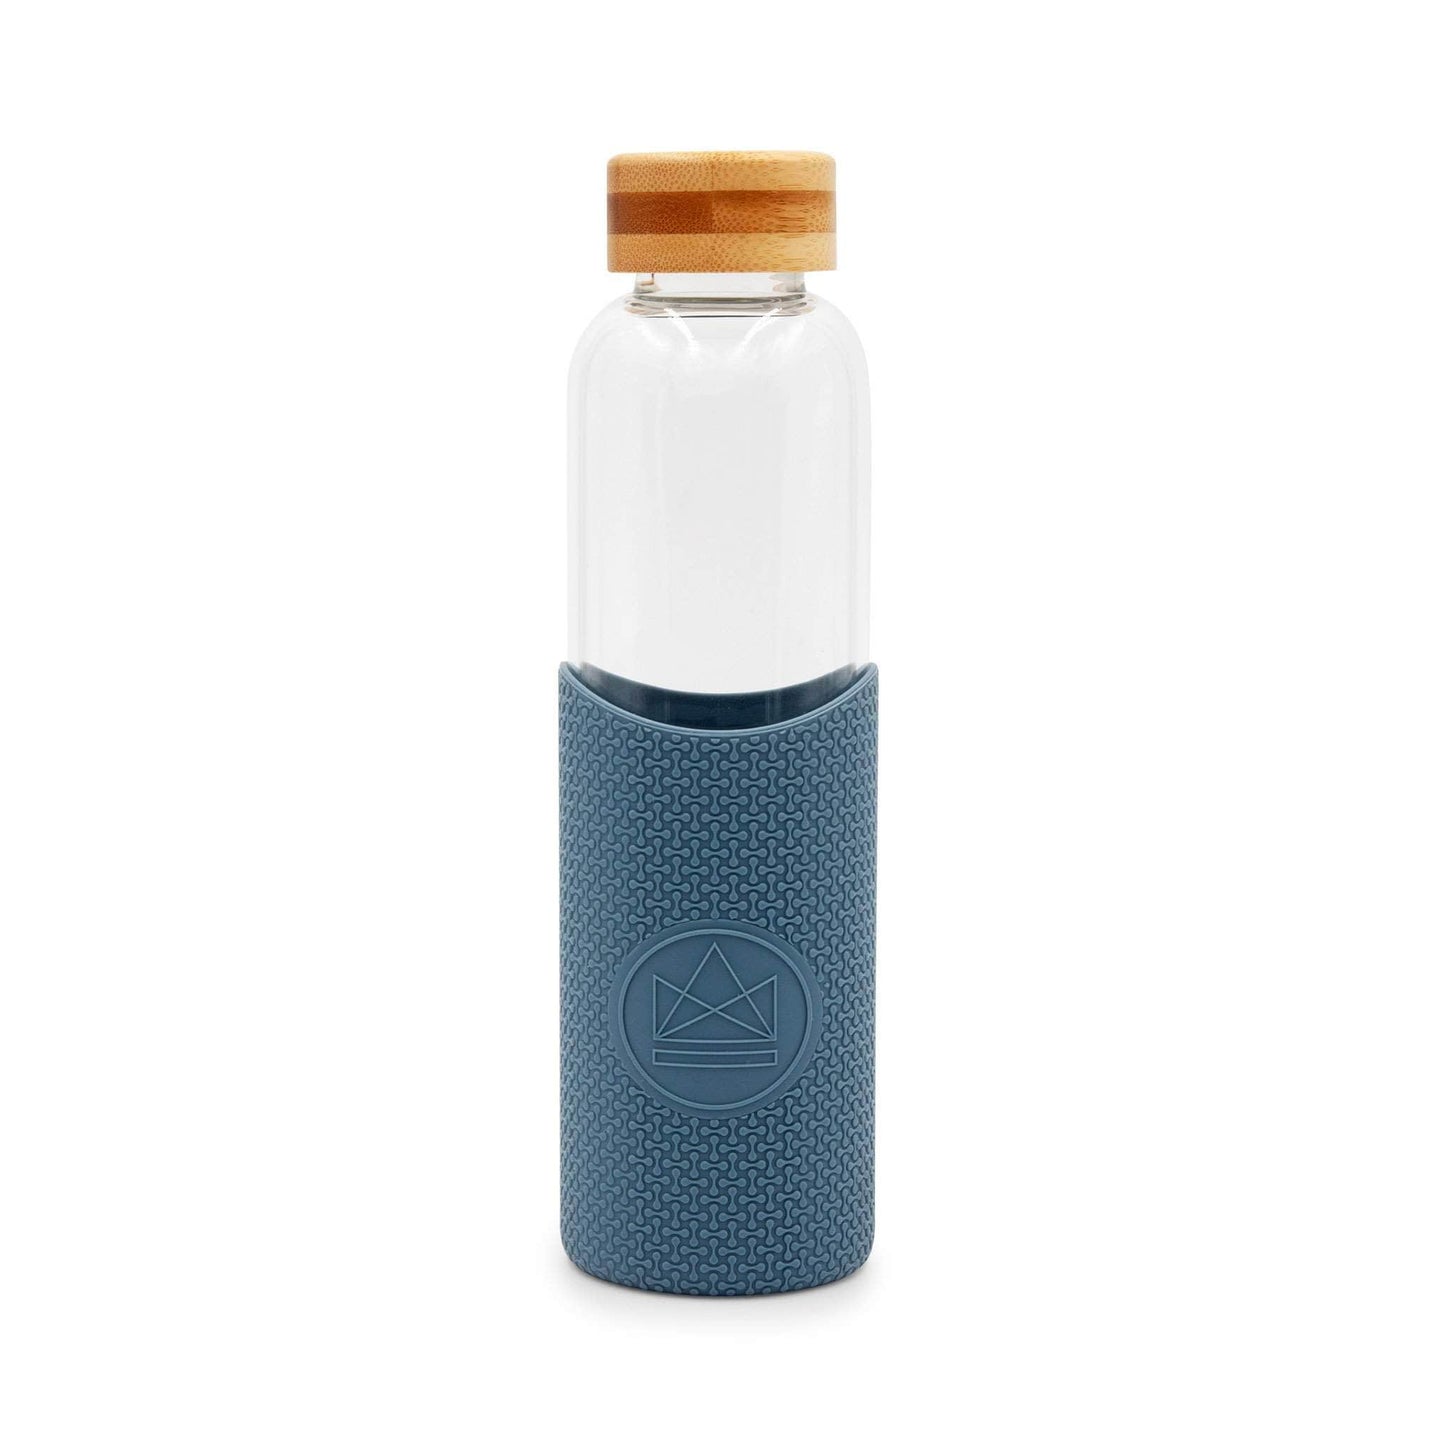 Neon Kactus Water Bottle Neon Kactus - Glass Water Bottles - 550ml - Super Sonic Pastel Blue